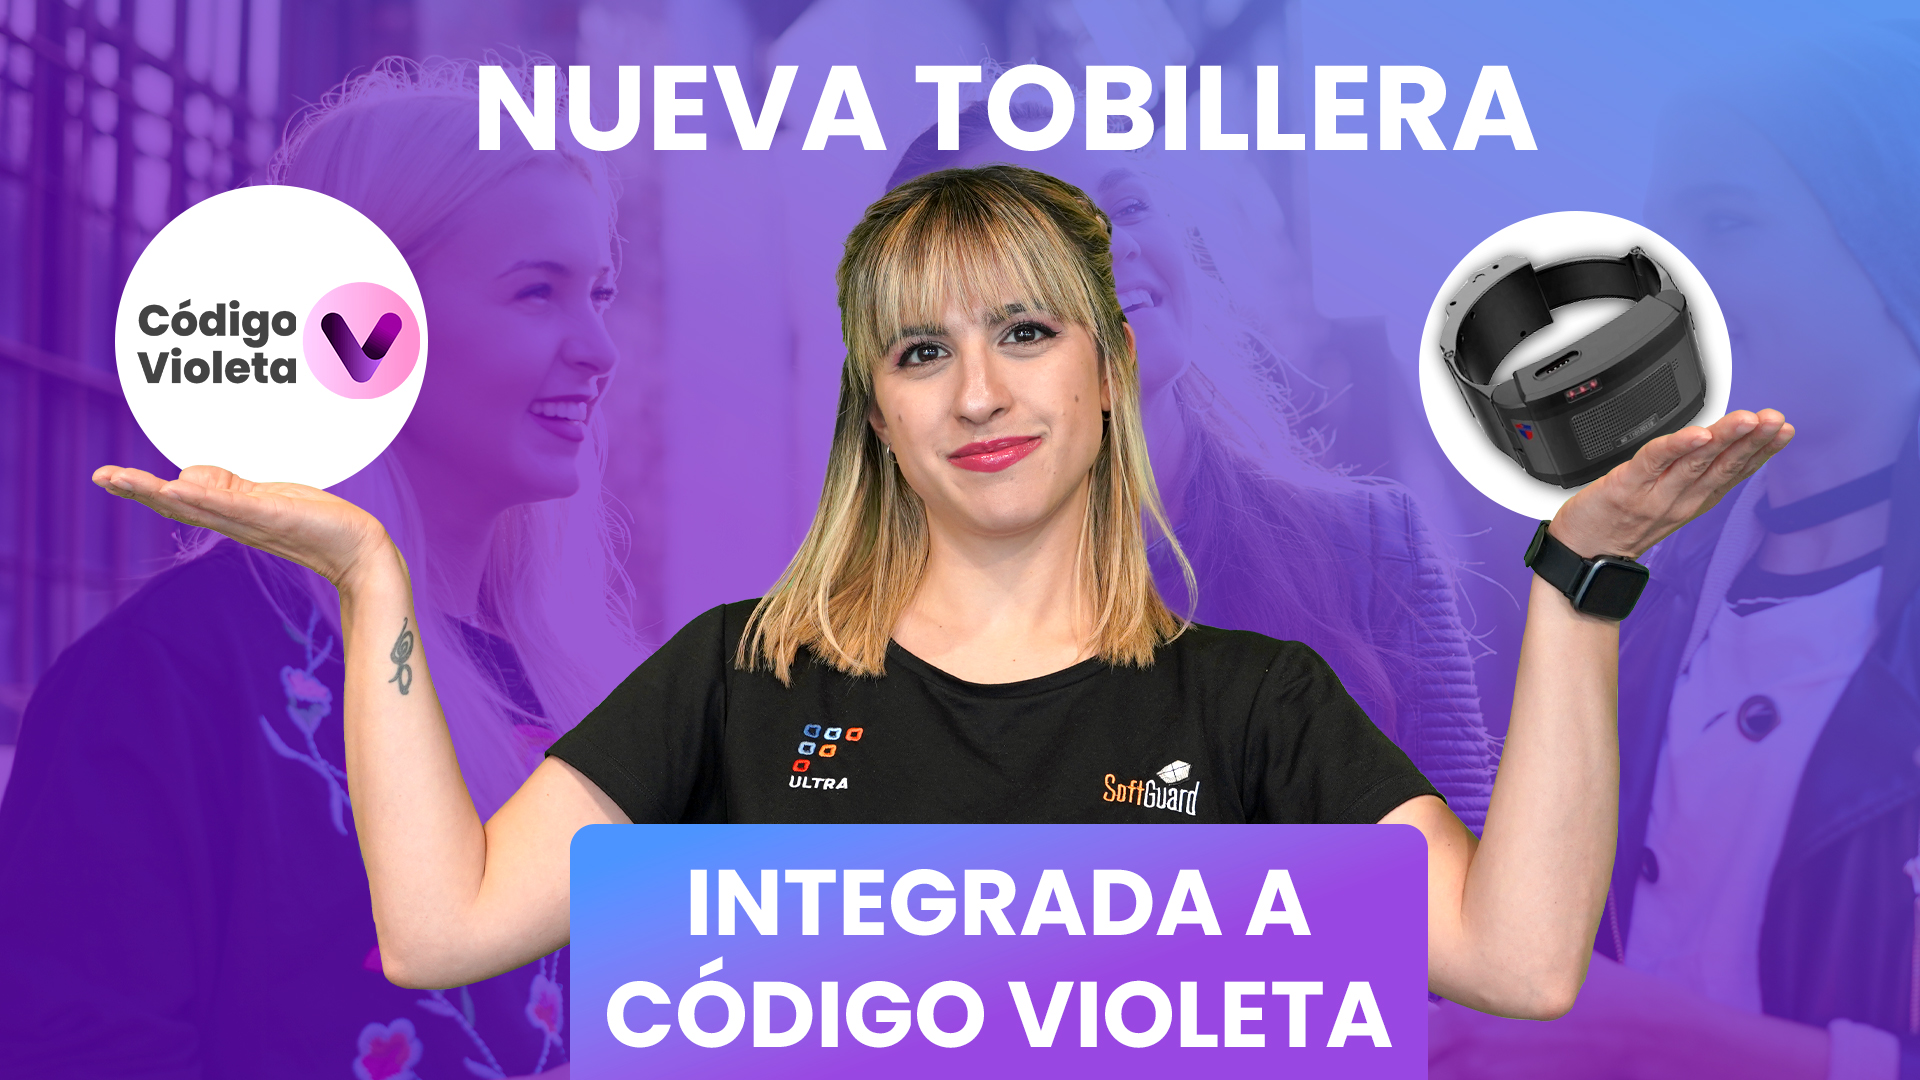 LIVE: Nueva TOBILLERA integrada a Código Violeta